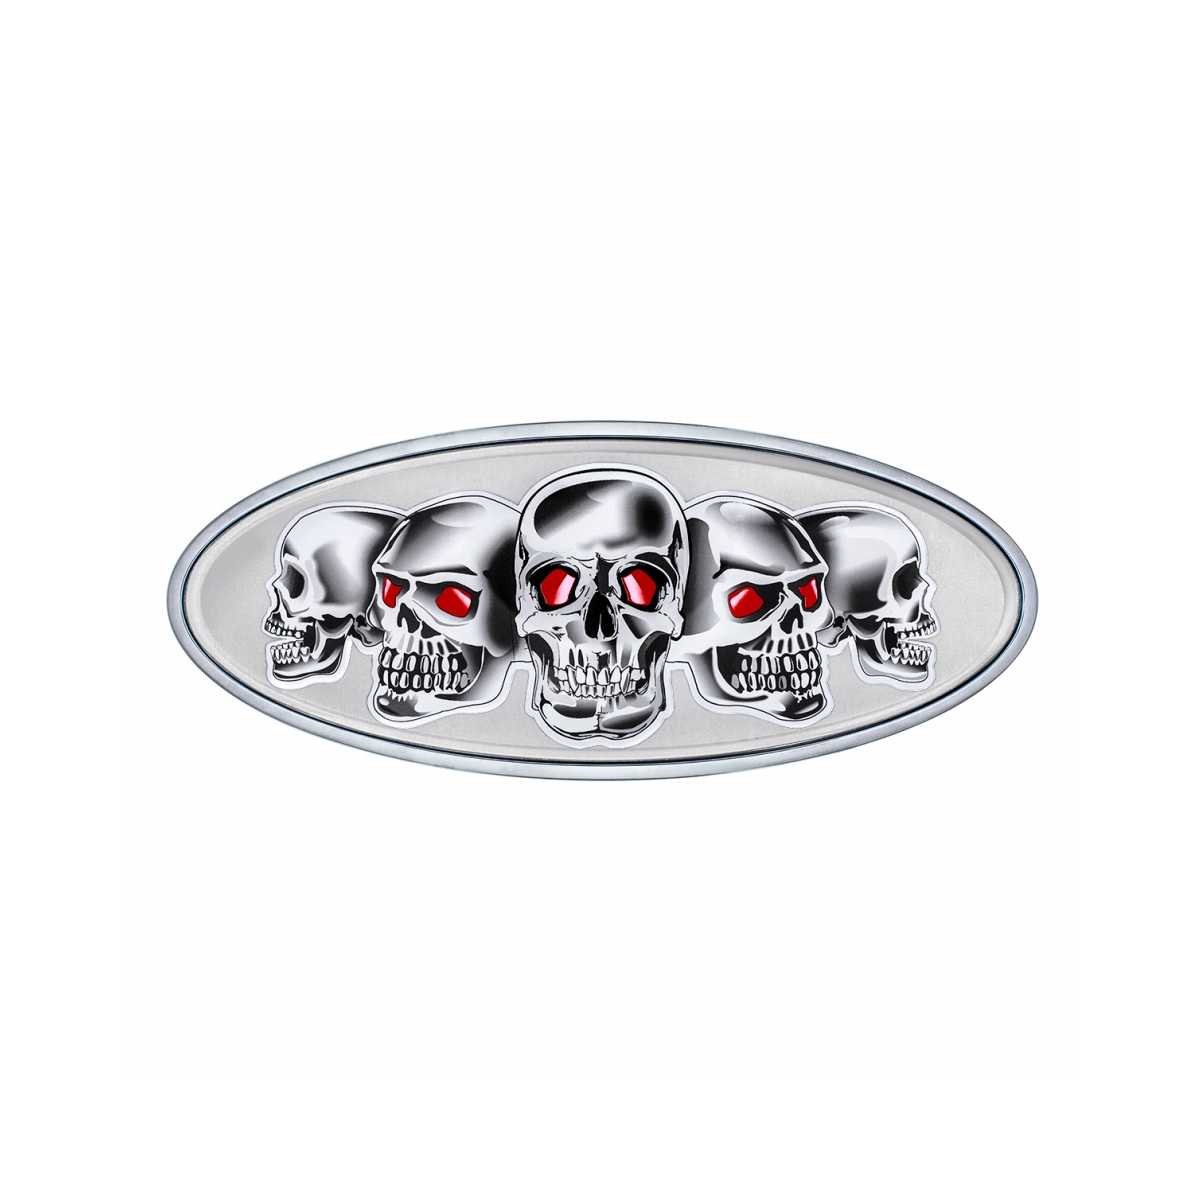 Chrome Die Cast Skull Emblem - Silver